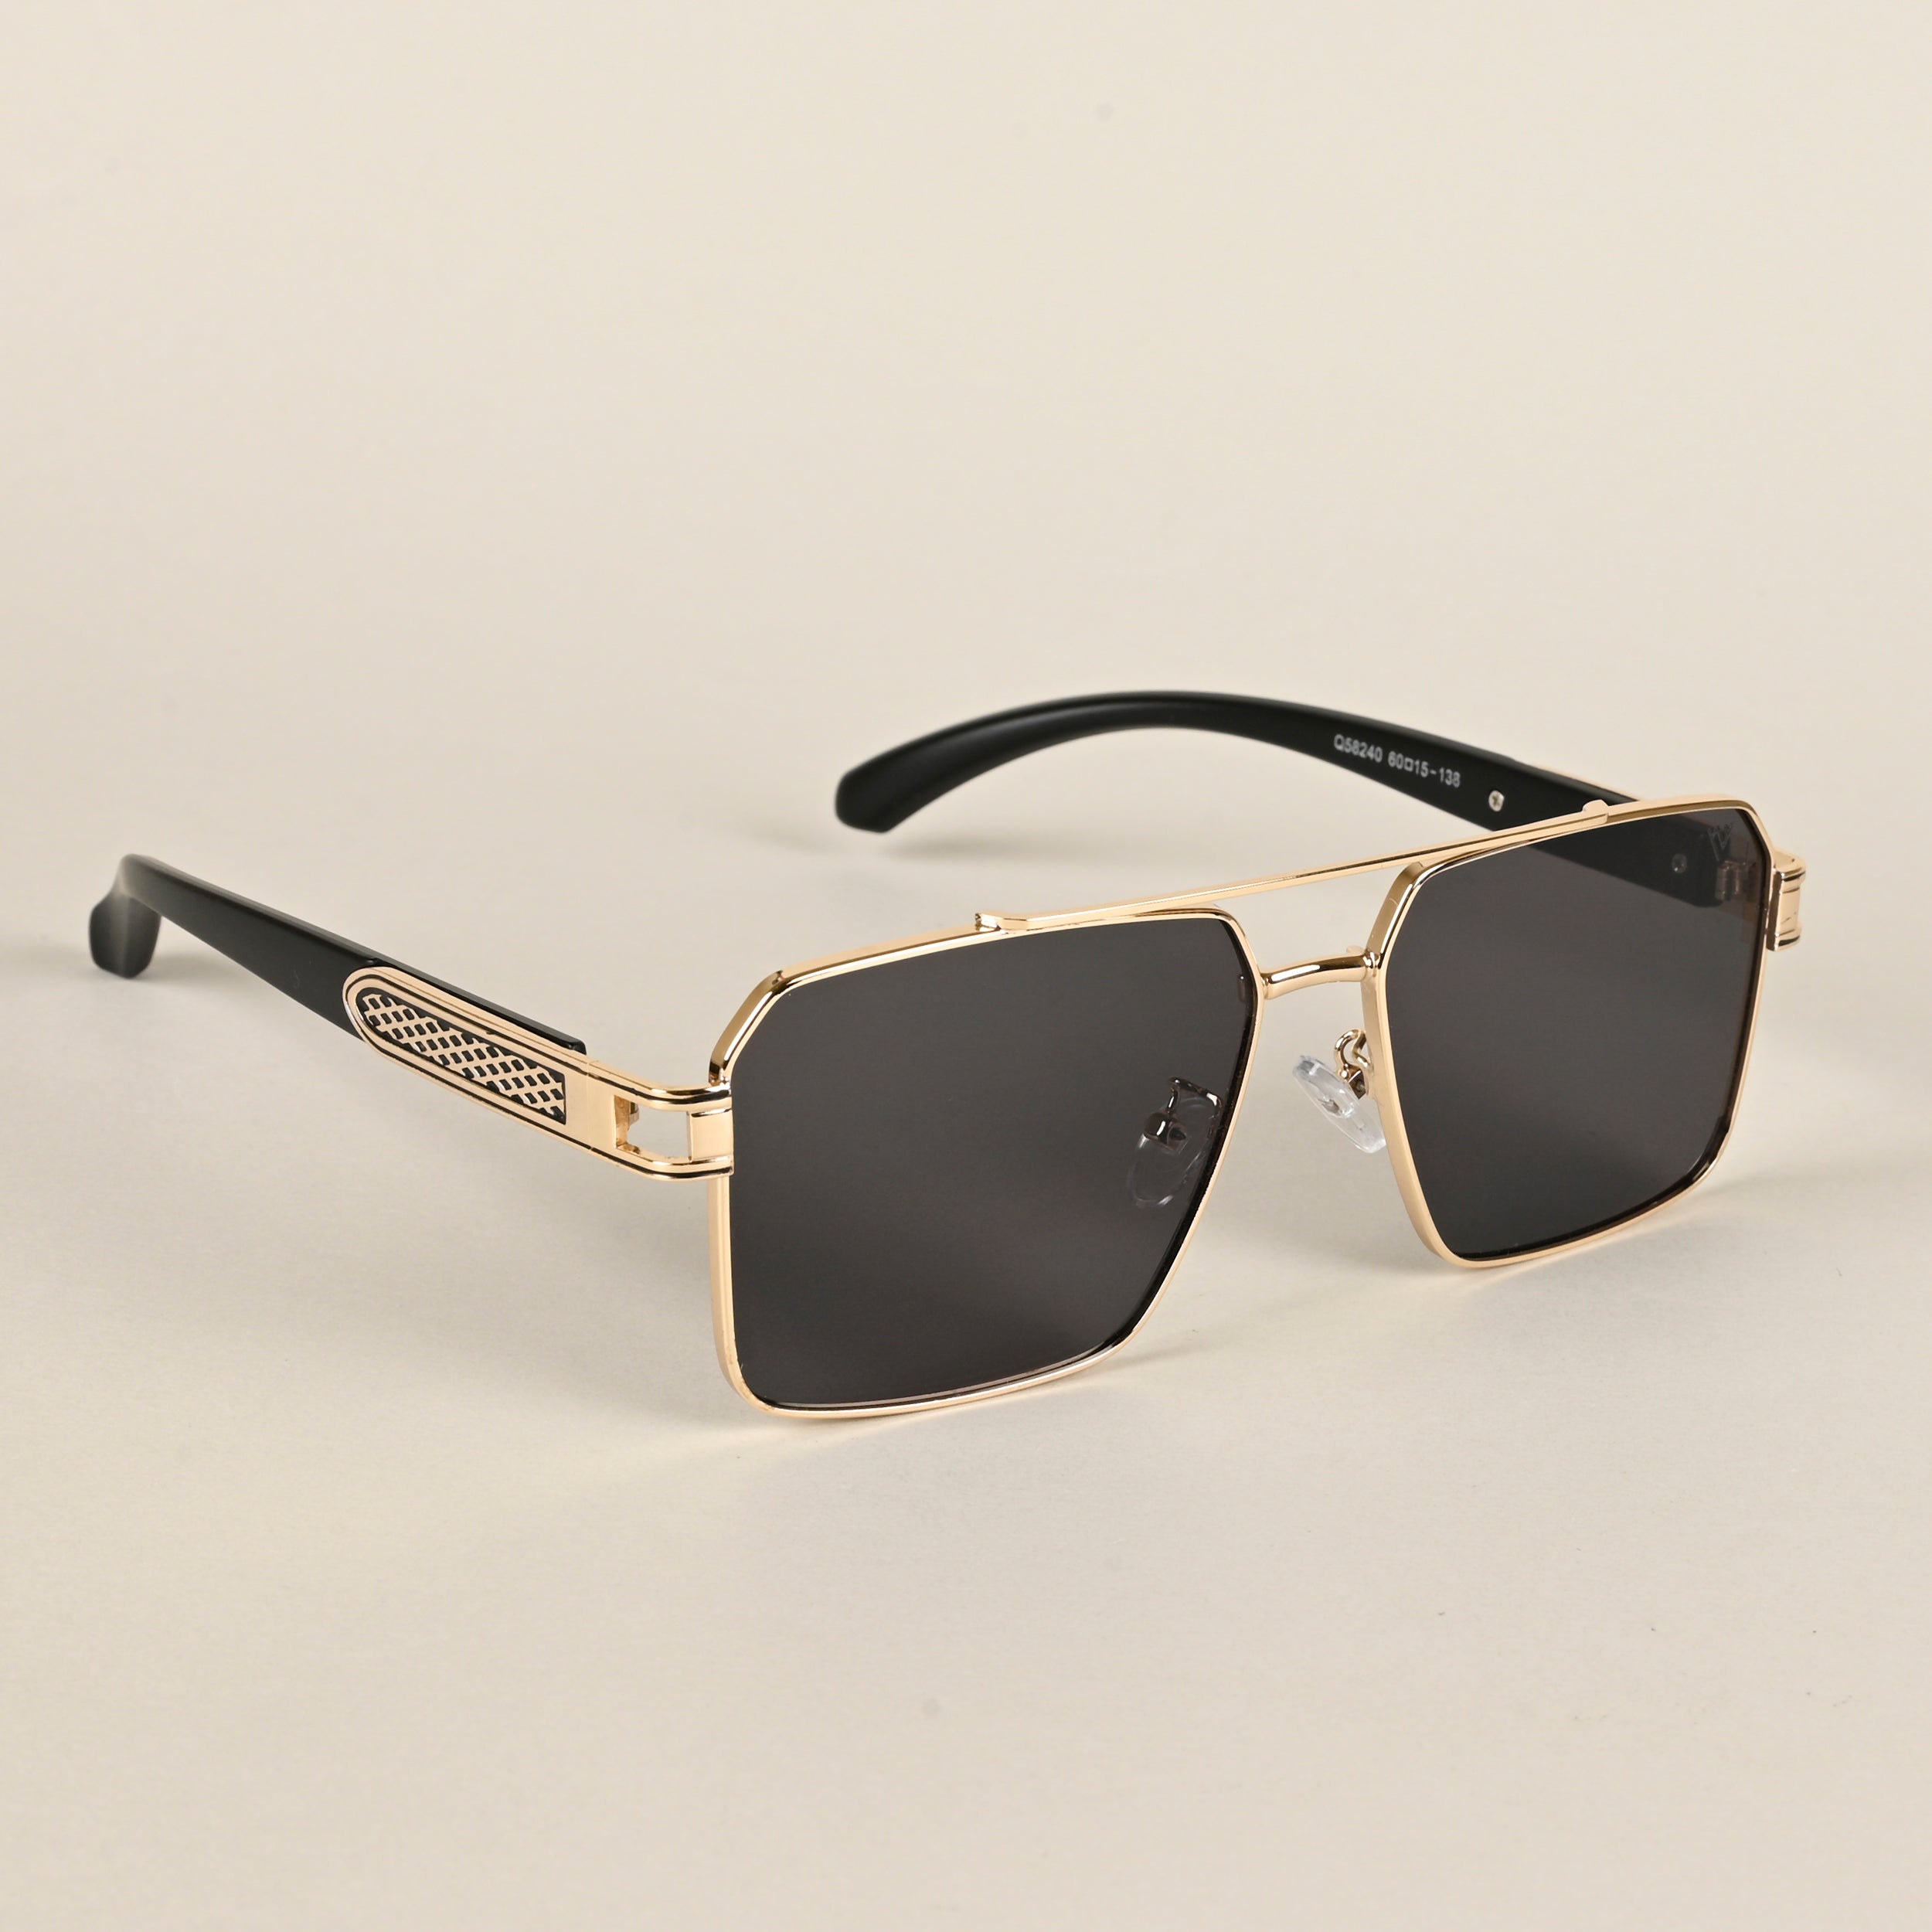 Voyage Black Wayfarer Sunglasses for Men & Women (58240MG4209)